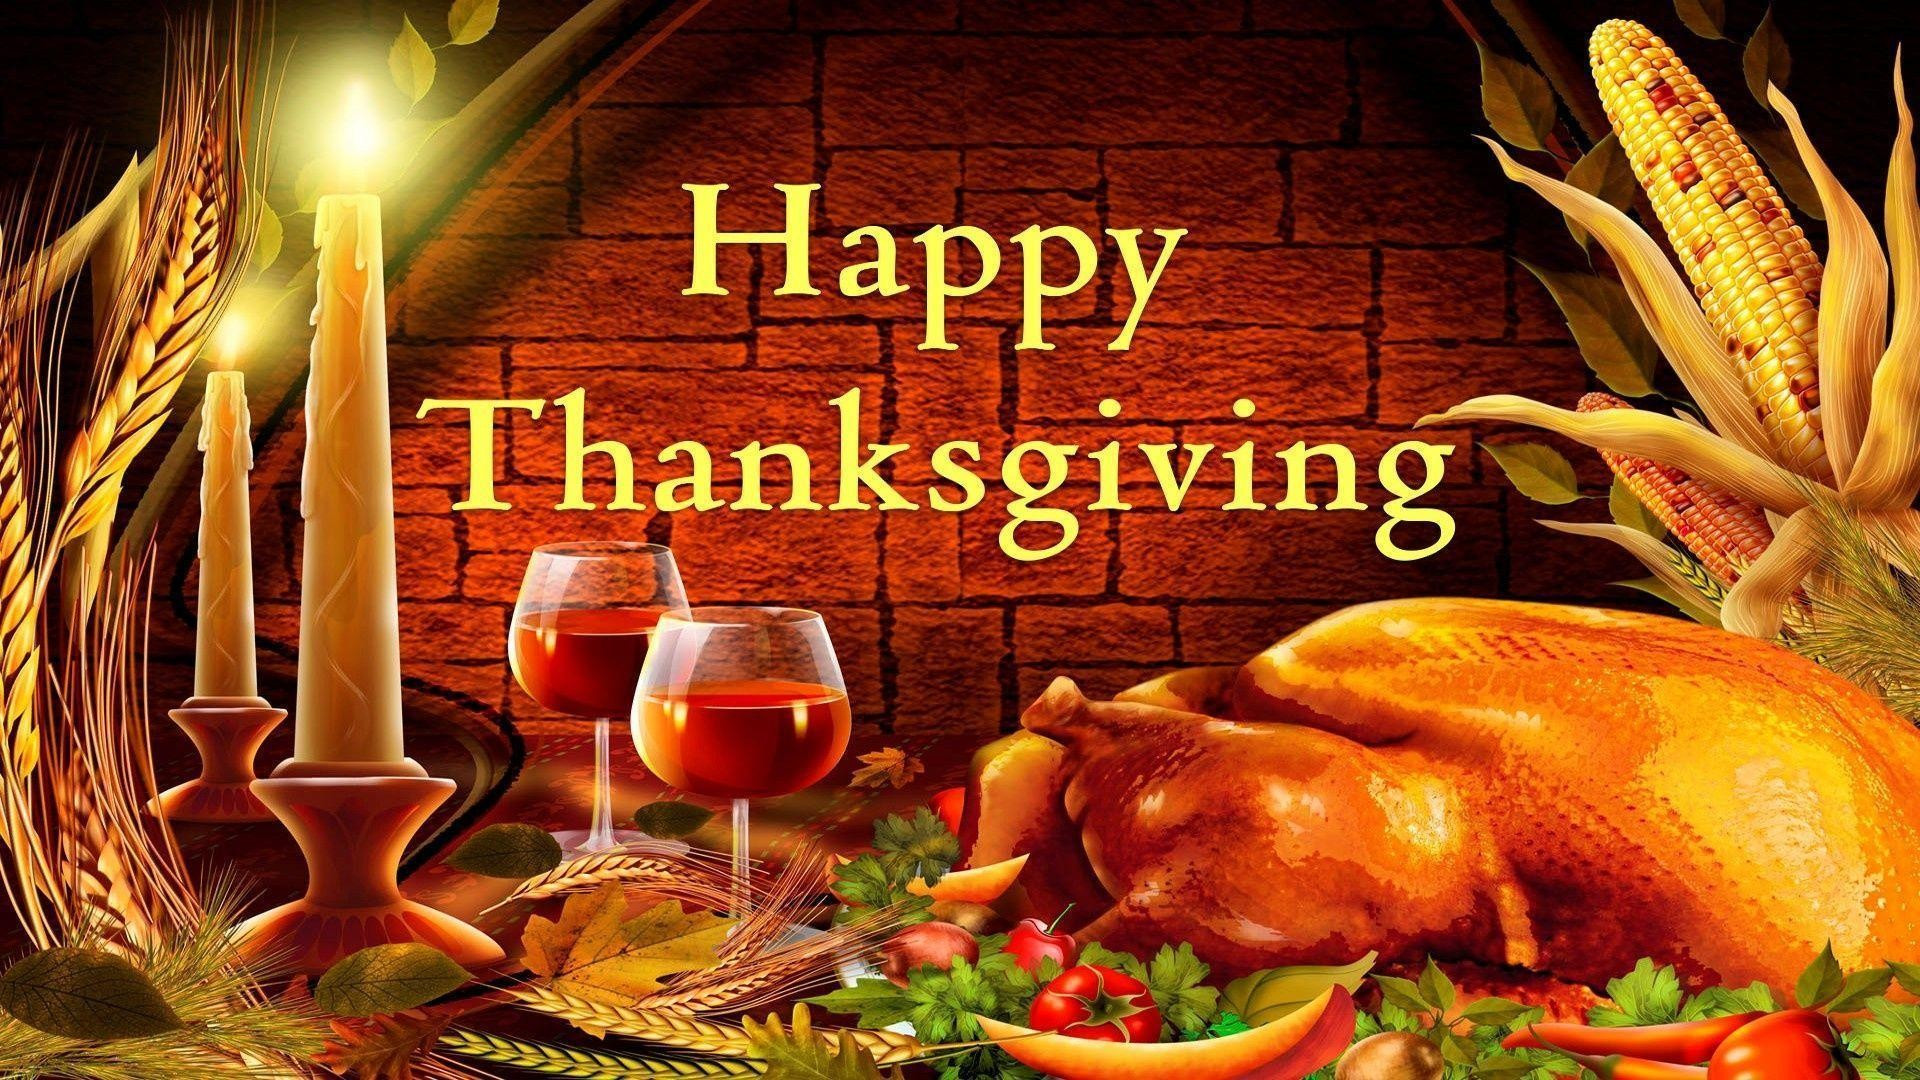 Free Turkey For Thanksgiving 2020
 50 Happy Thanksgiving 2020